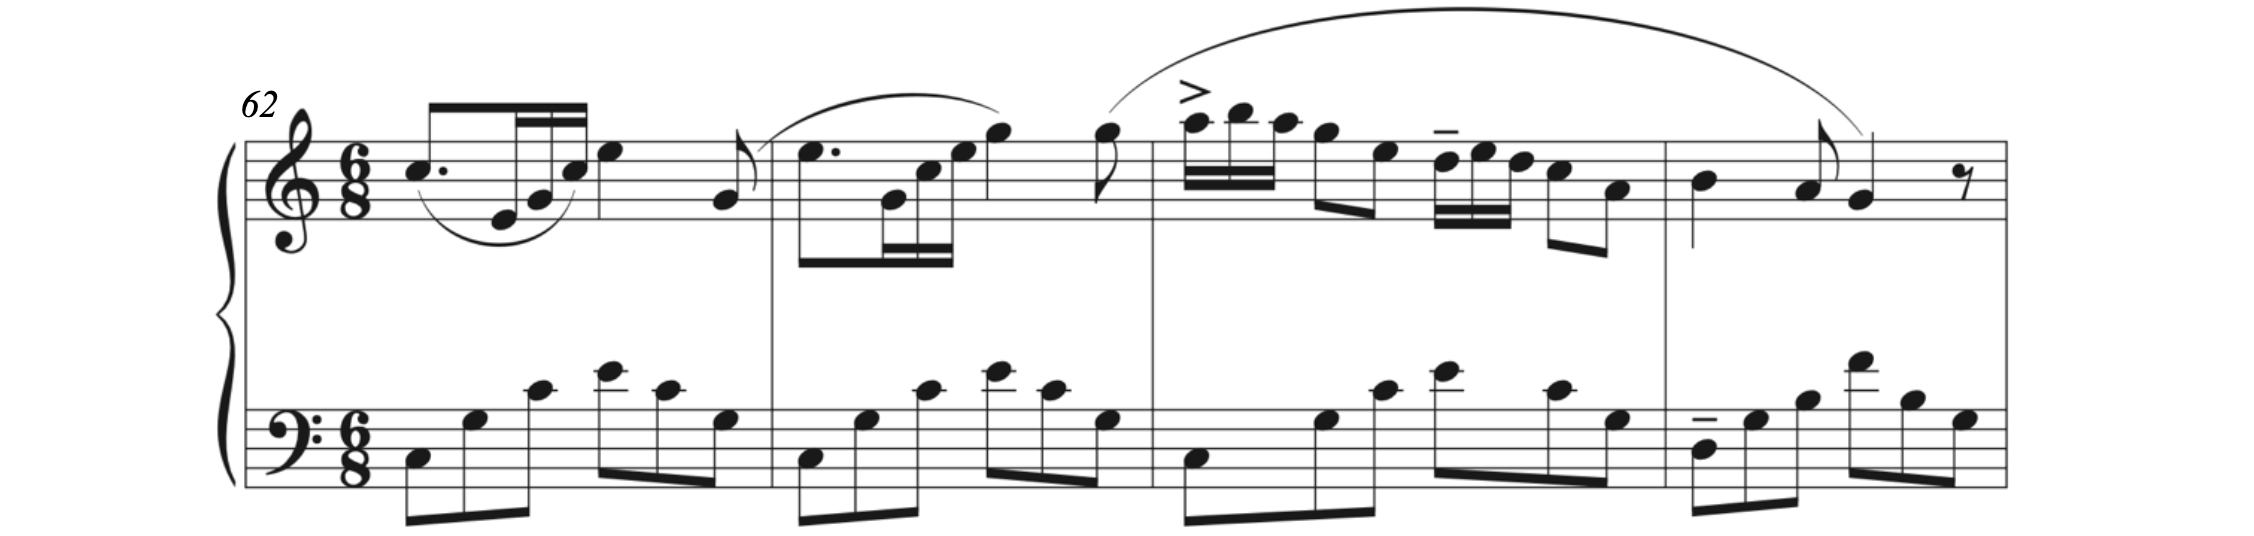 Score to Virgil, Barchetta, op. 23, no. 1